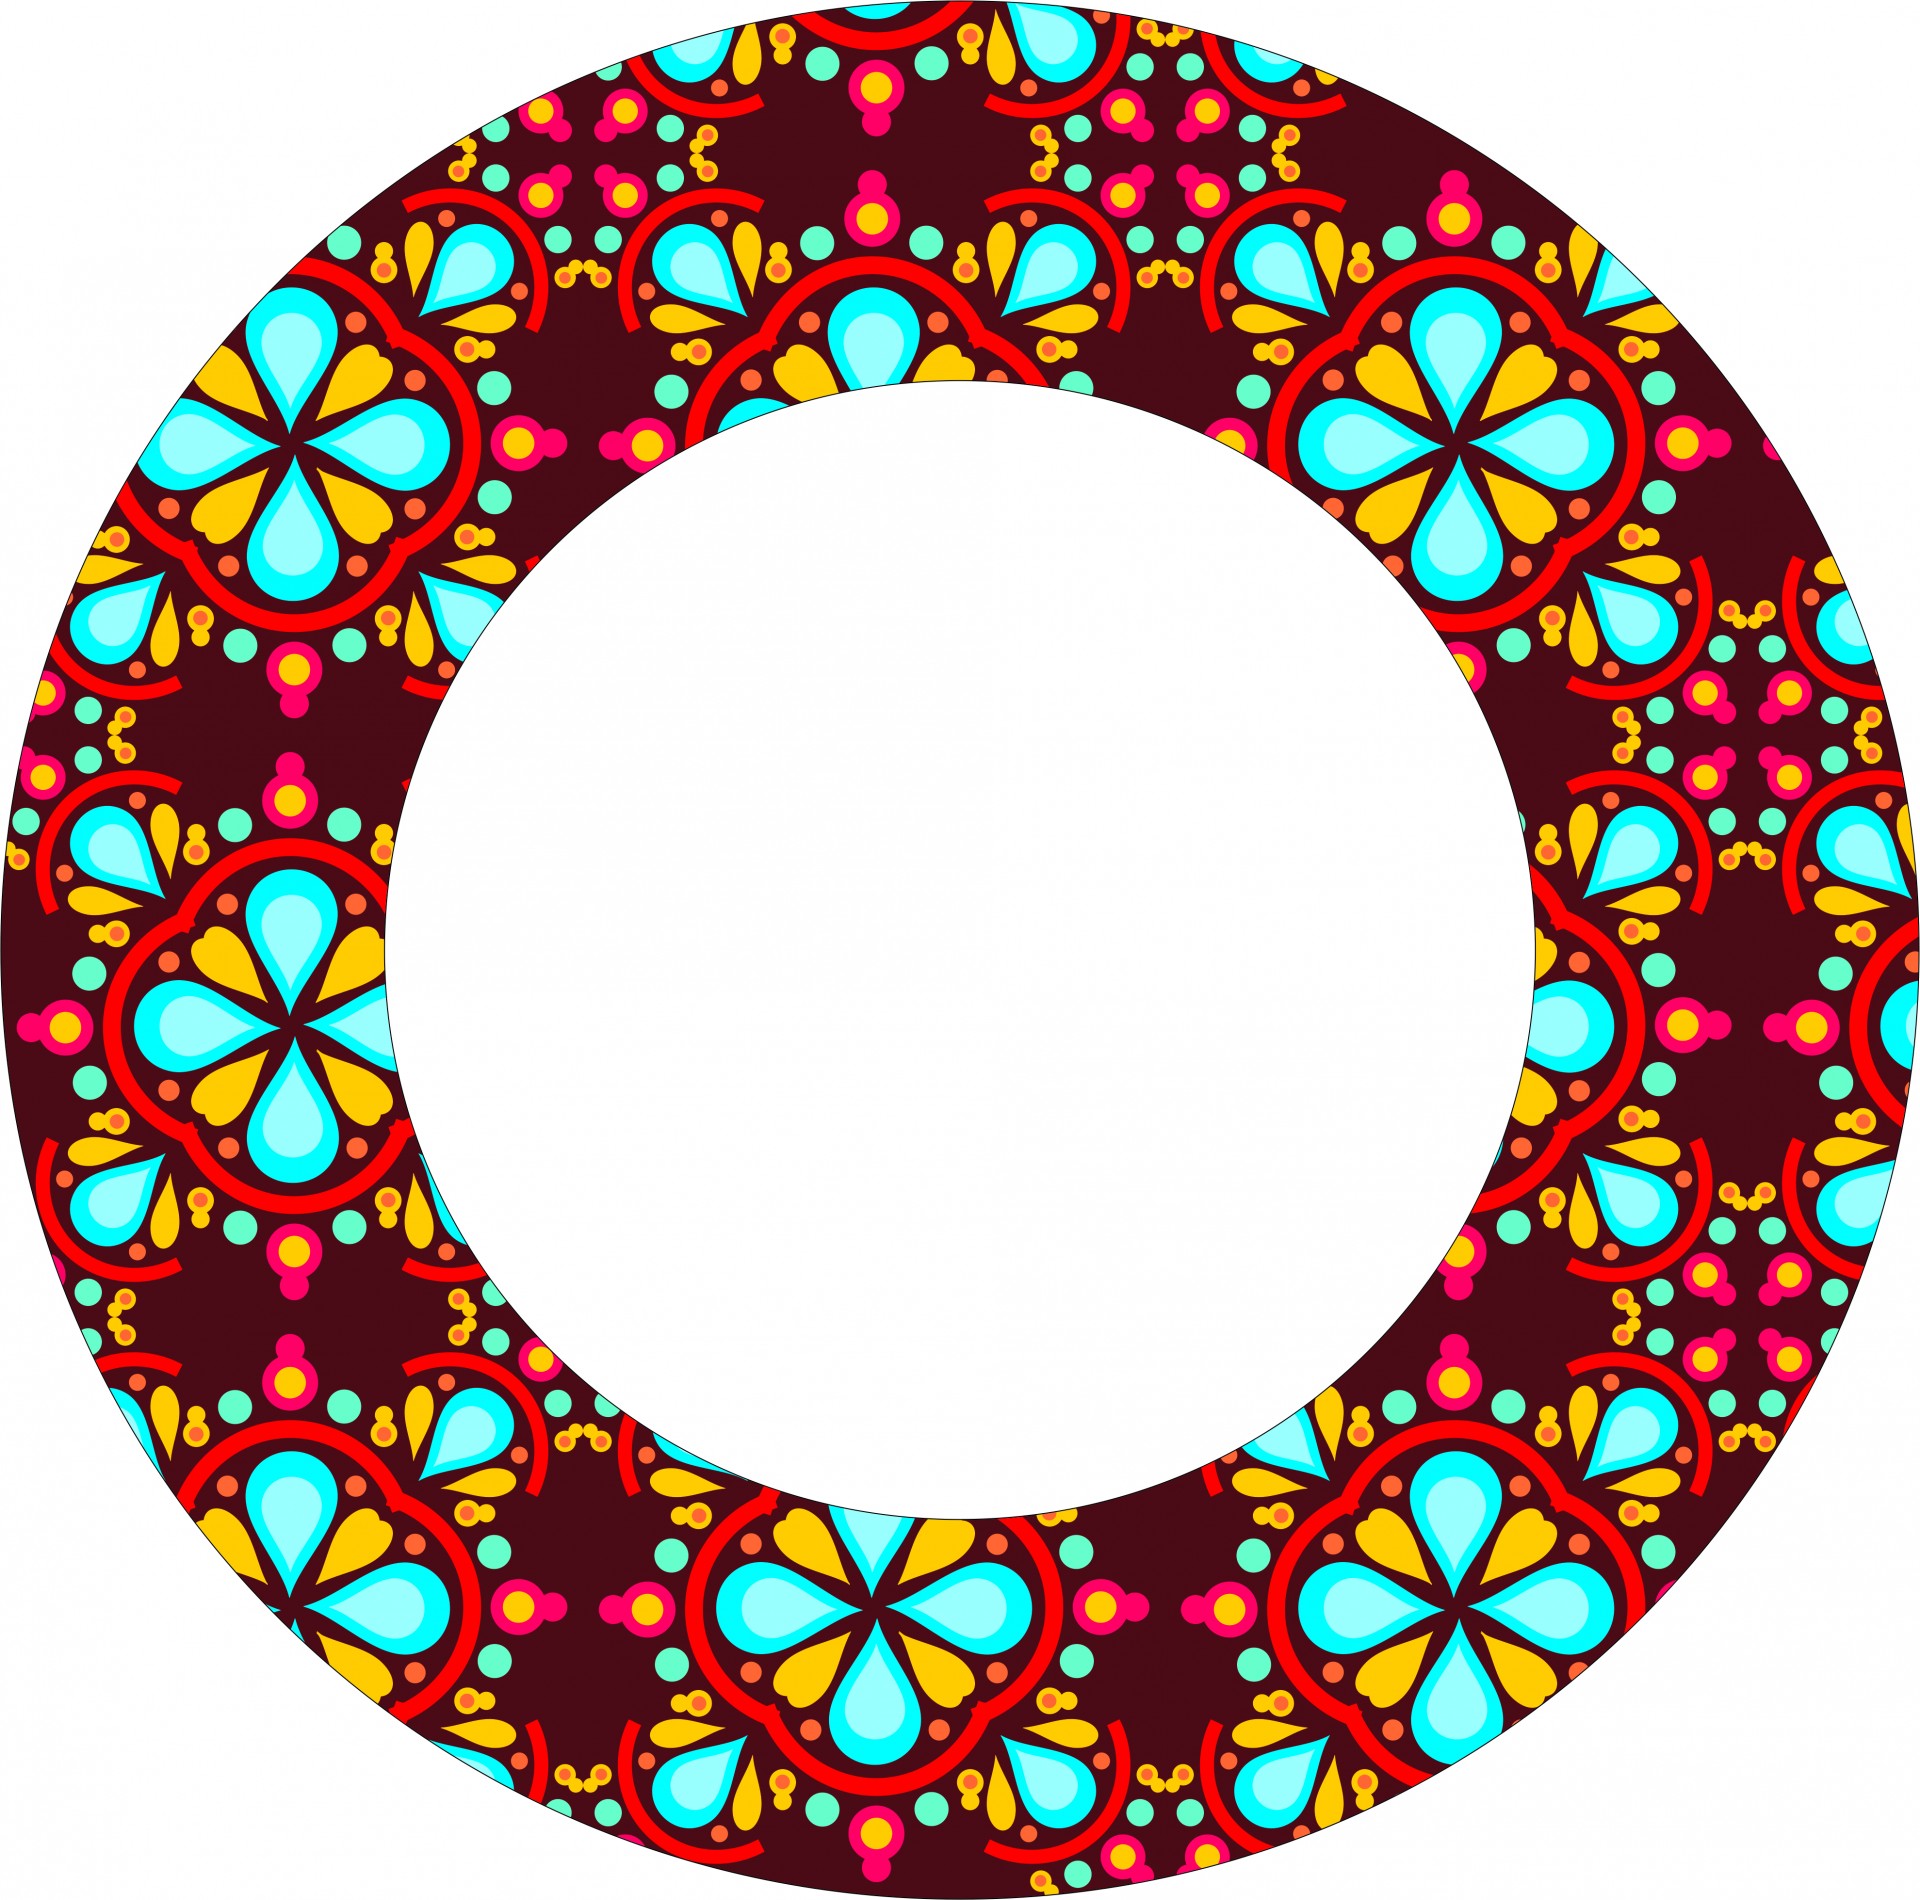 Круг з. Красивый круг. Орнамент в круге. Узоры круглые цветные. Орнамент в круге цветной.